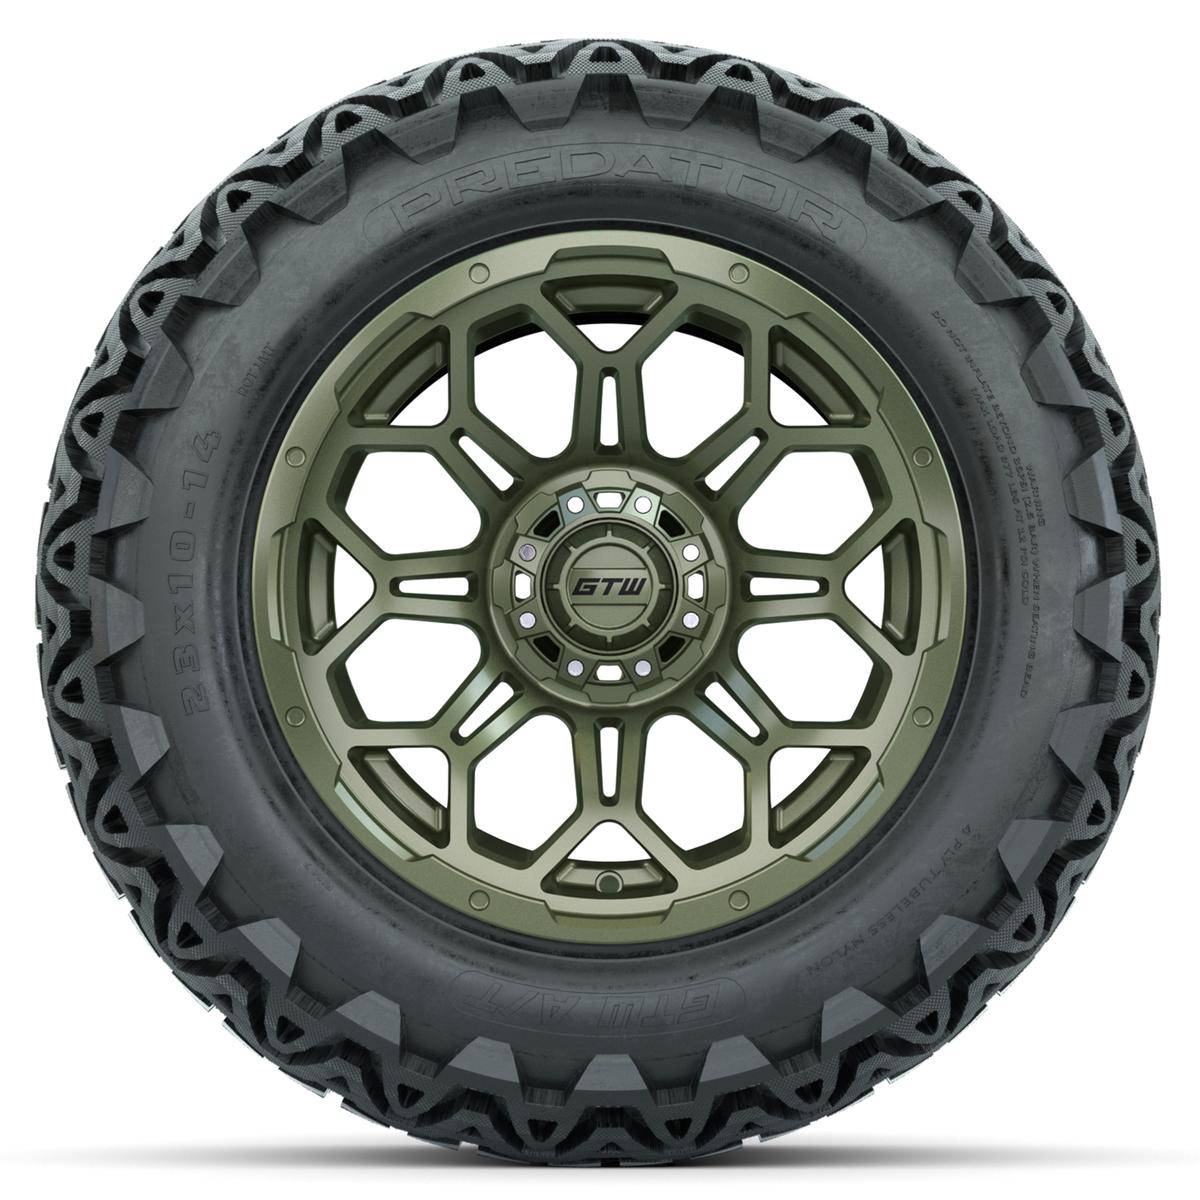 Set of (4) 14 in GTW Bravo Wheels with 23x10-14 GTW Predator All-Terrain Tires